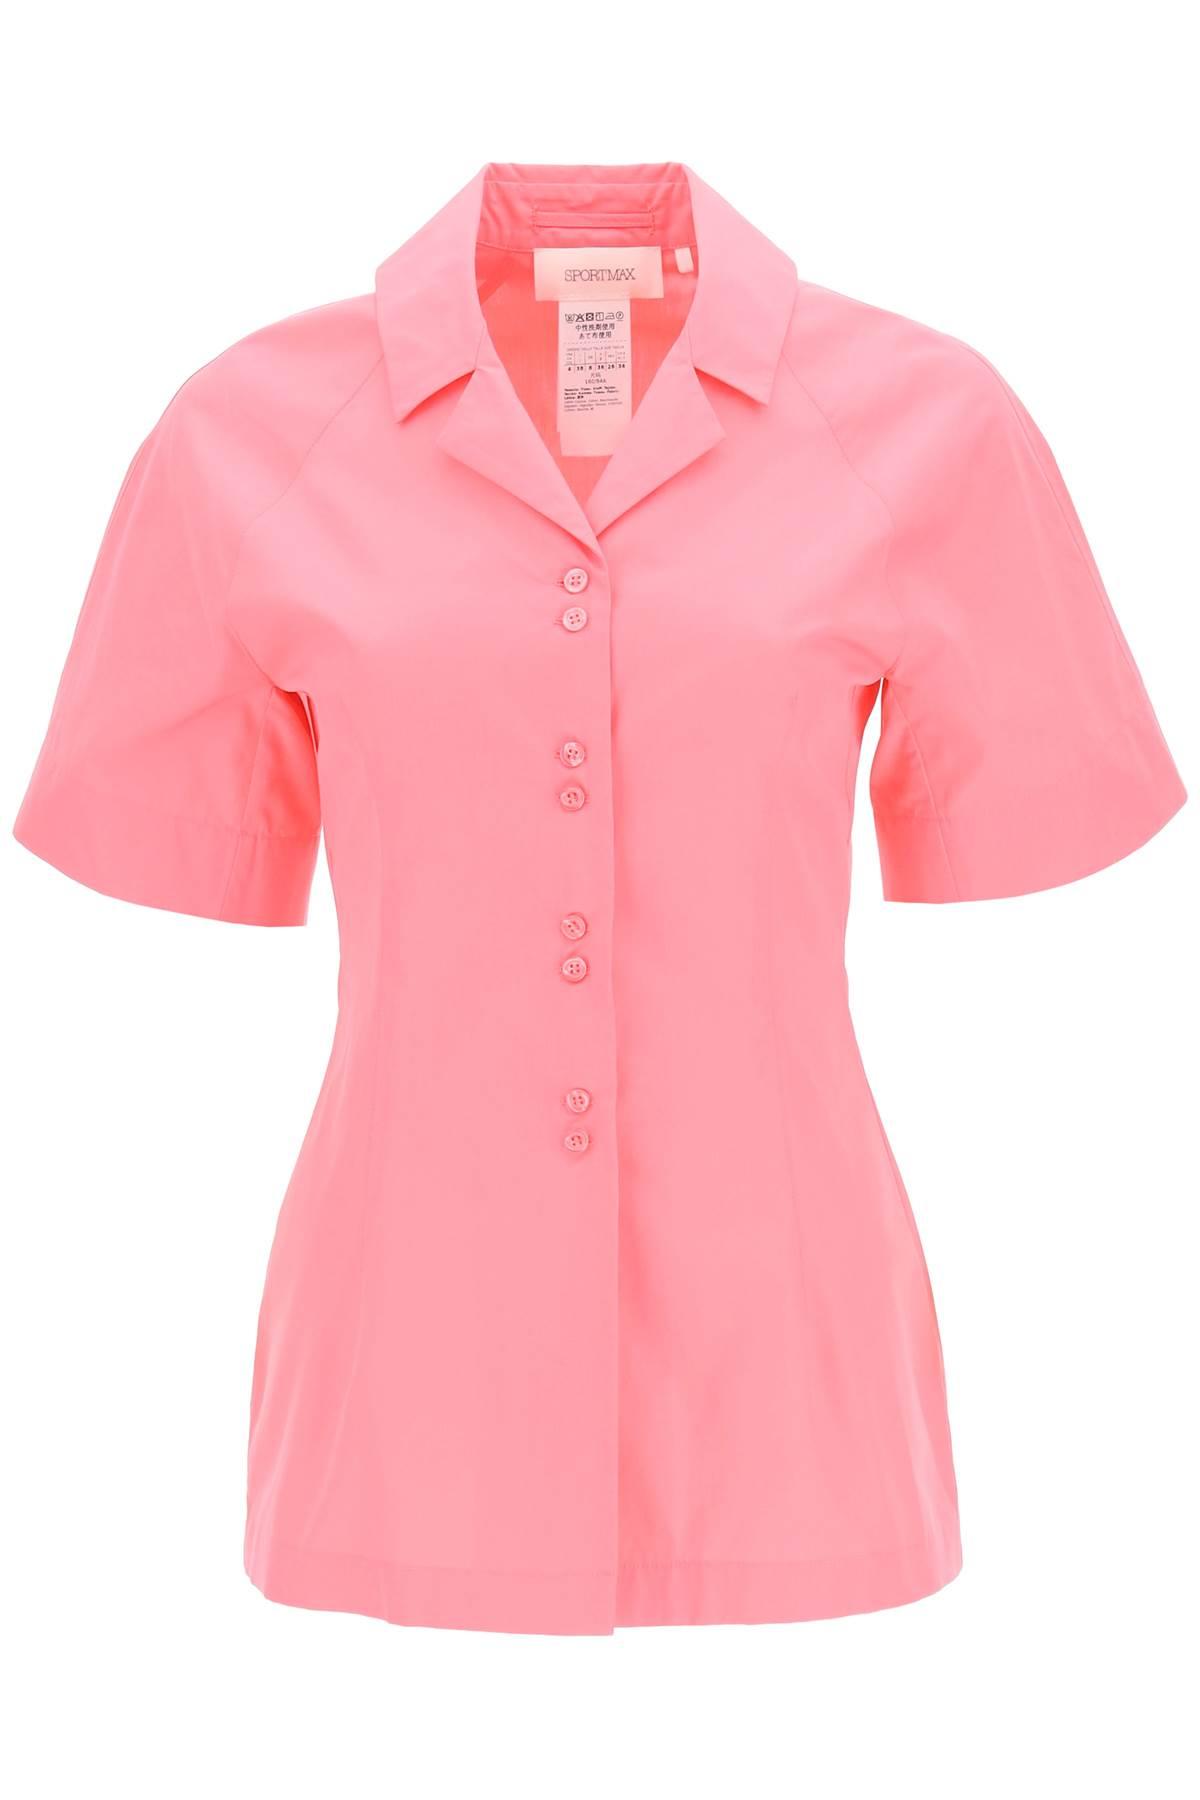 Sportmax Waisted Poplin Shirt in Pink | Lyst